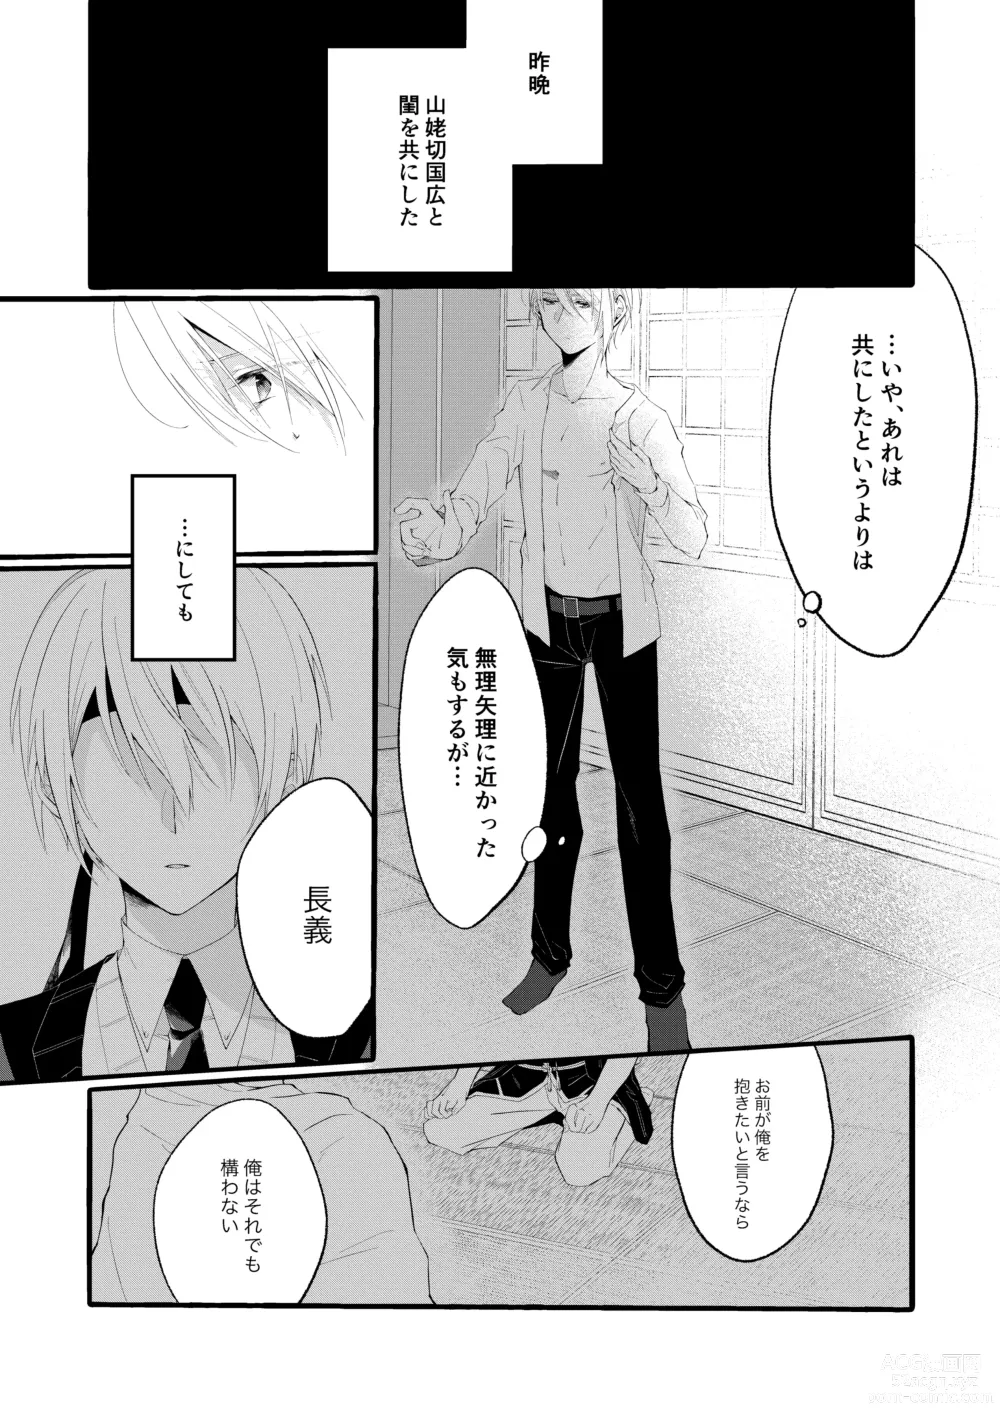 Page 6 of doujinshi Jiko Manzoku no ×××